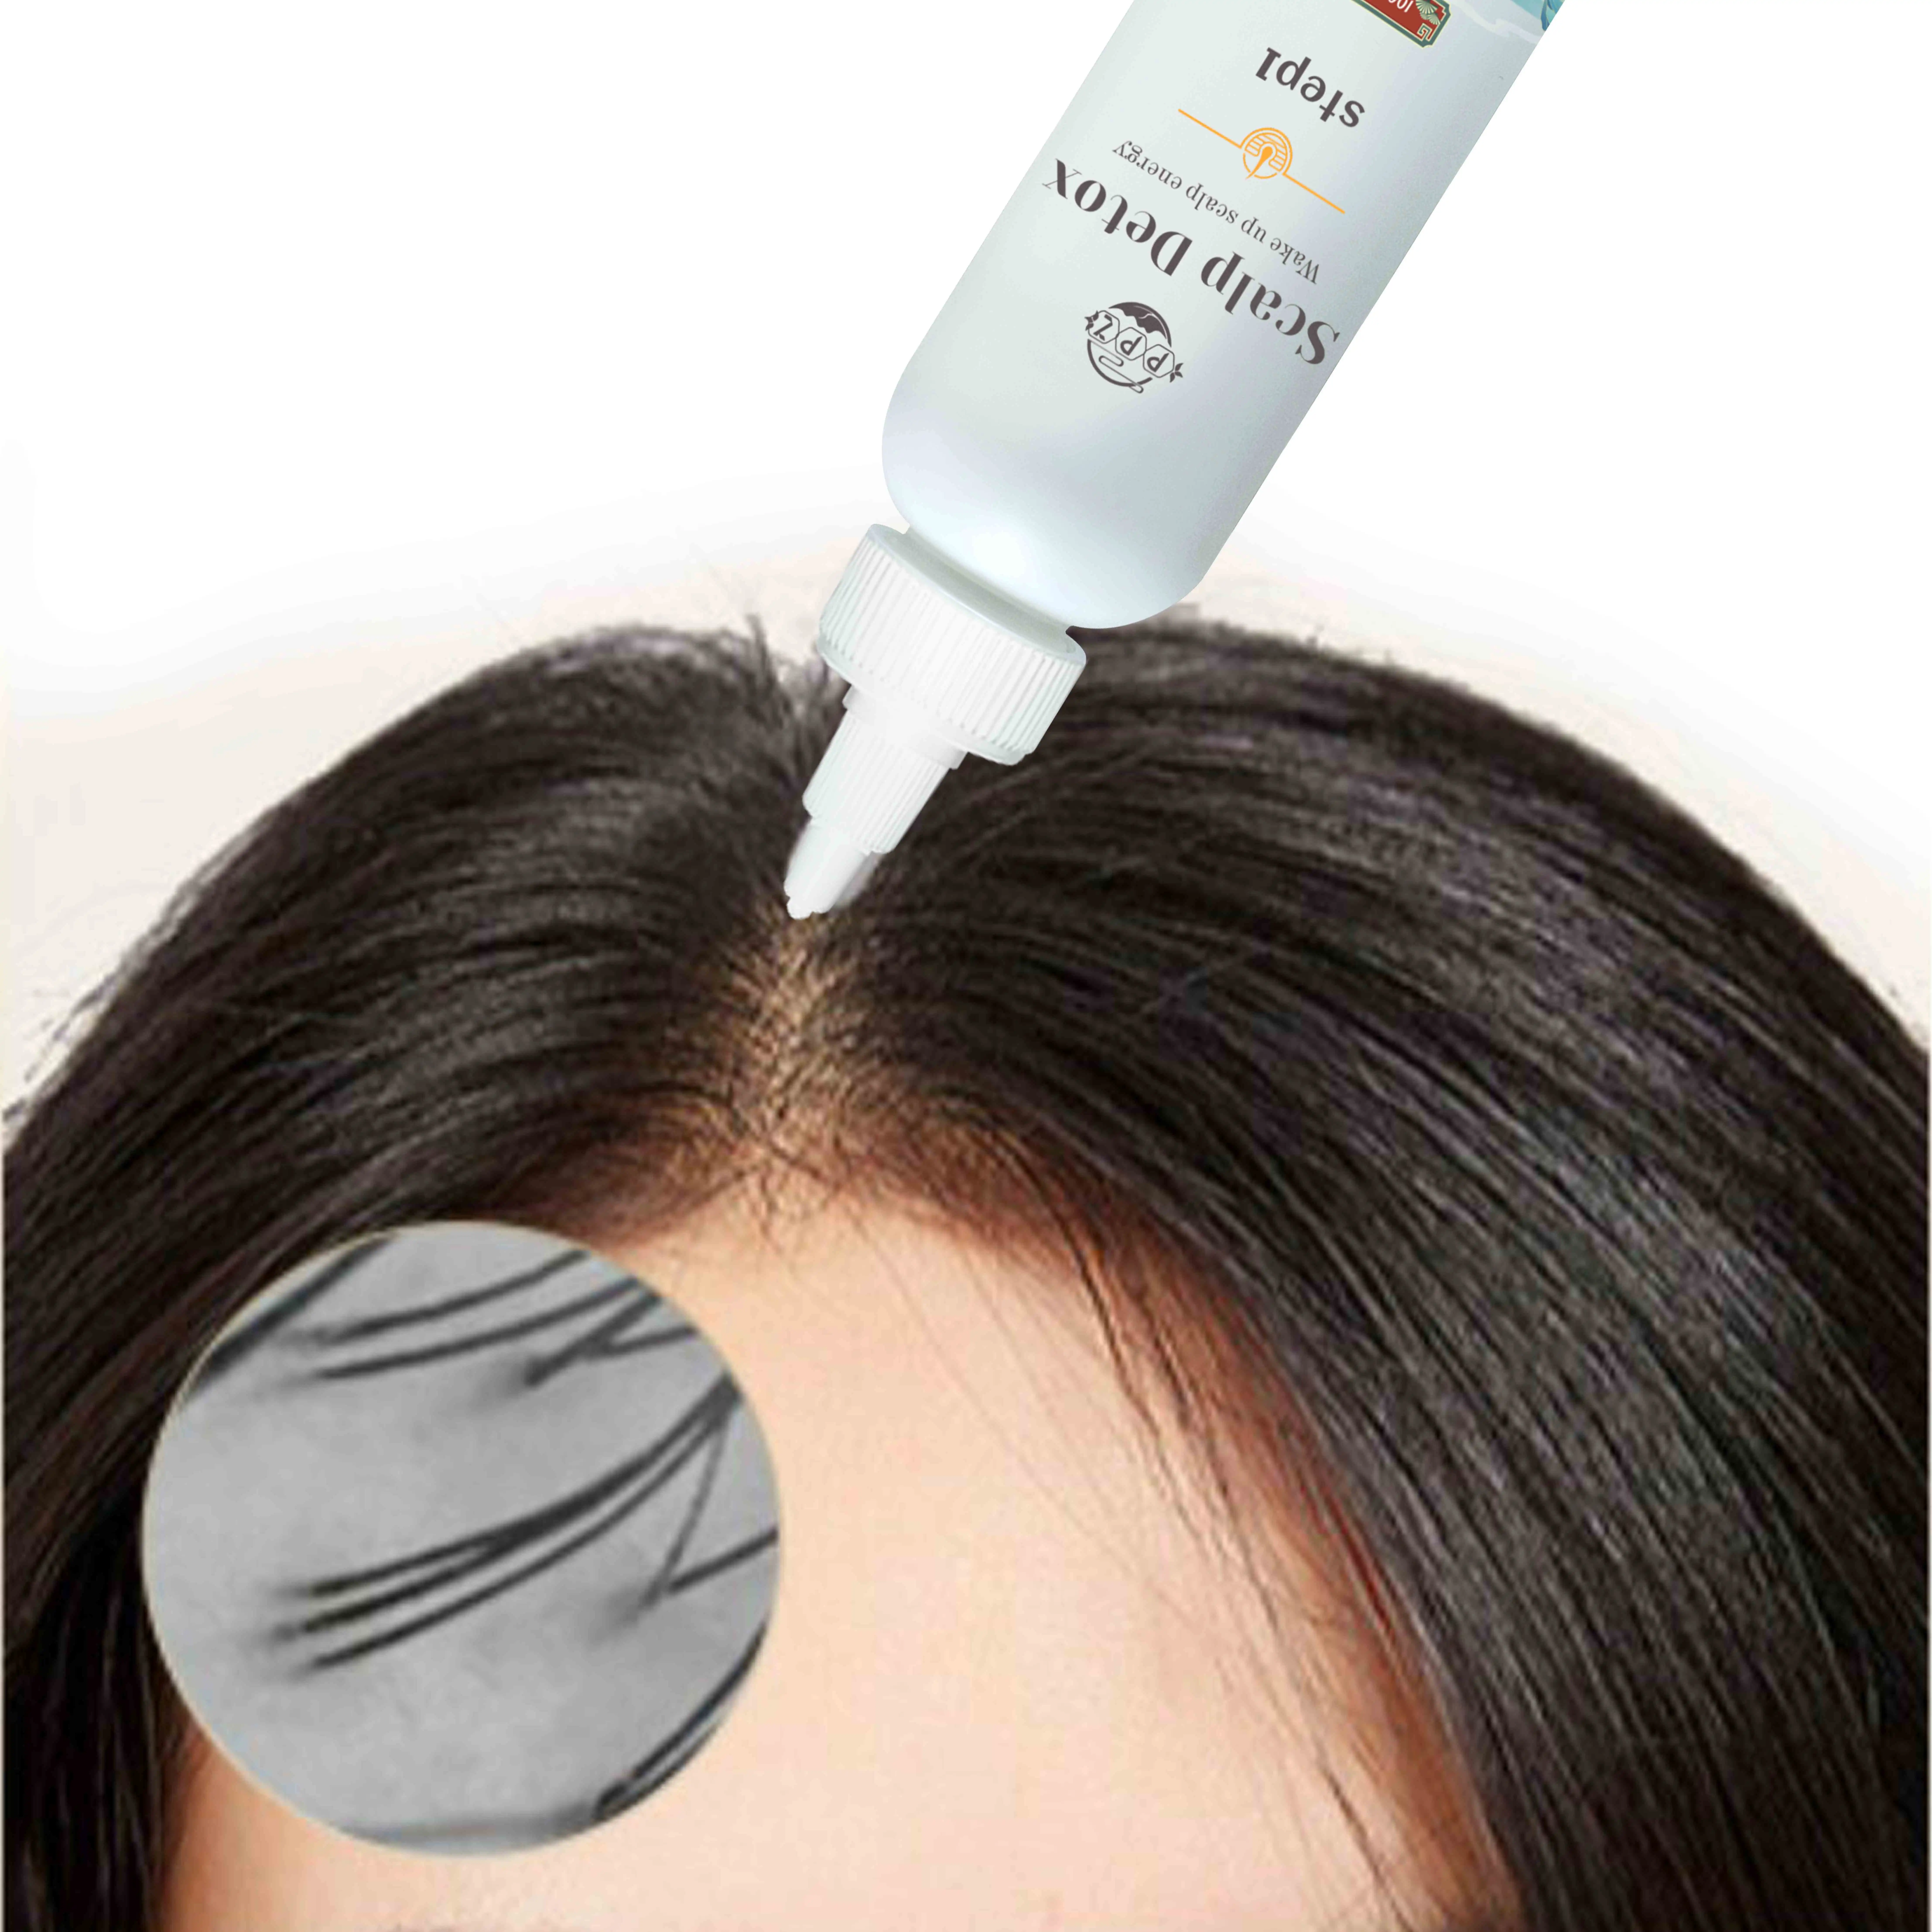 

Wholesale Scalp Detox Shampoo Hair Treatment Guangzhou Hair Care Supplier Anti-dandruff Scalp Care Products For Salon Home Use